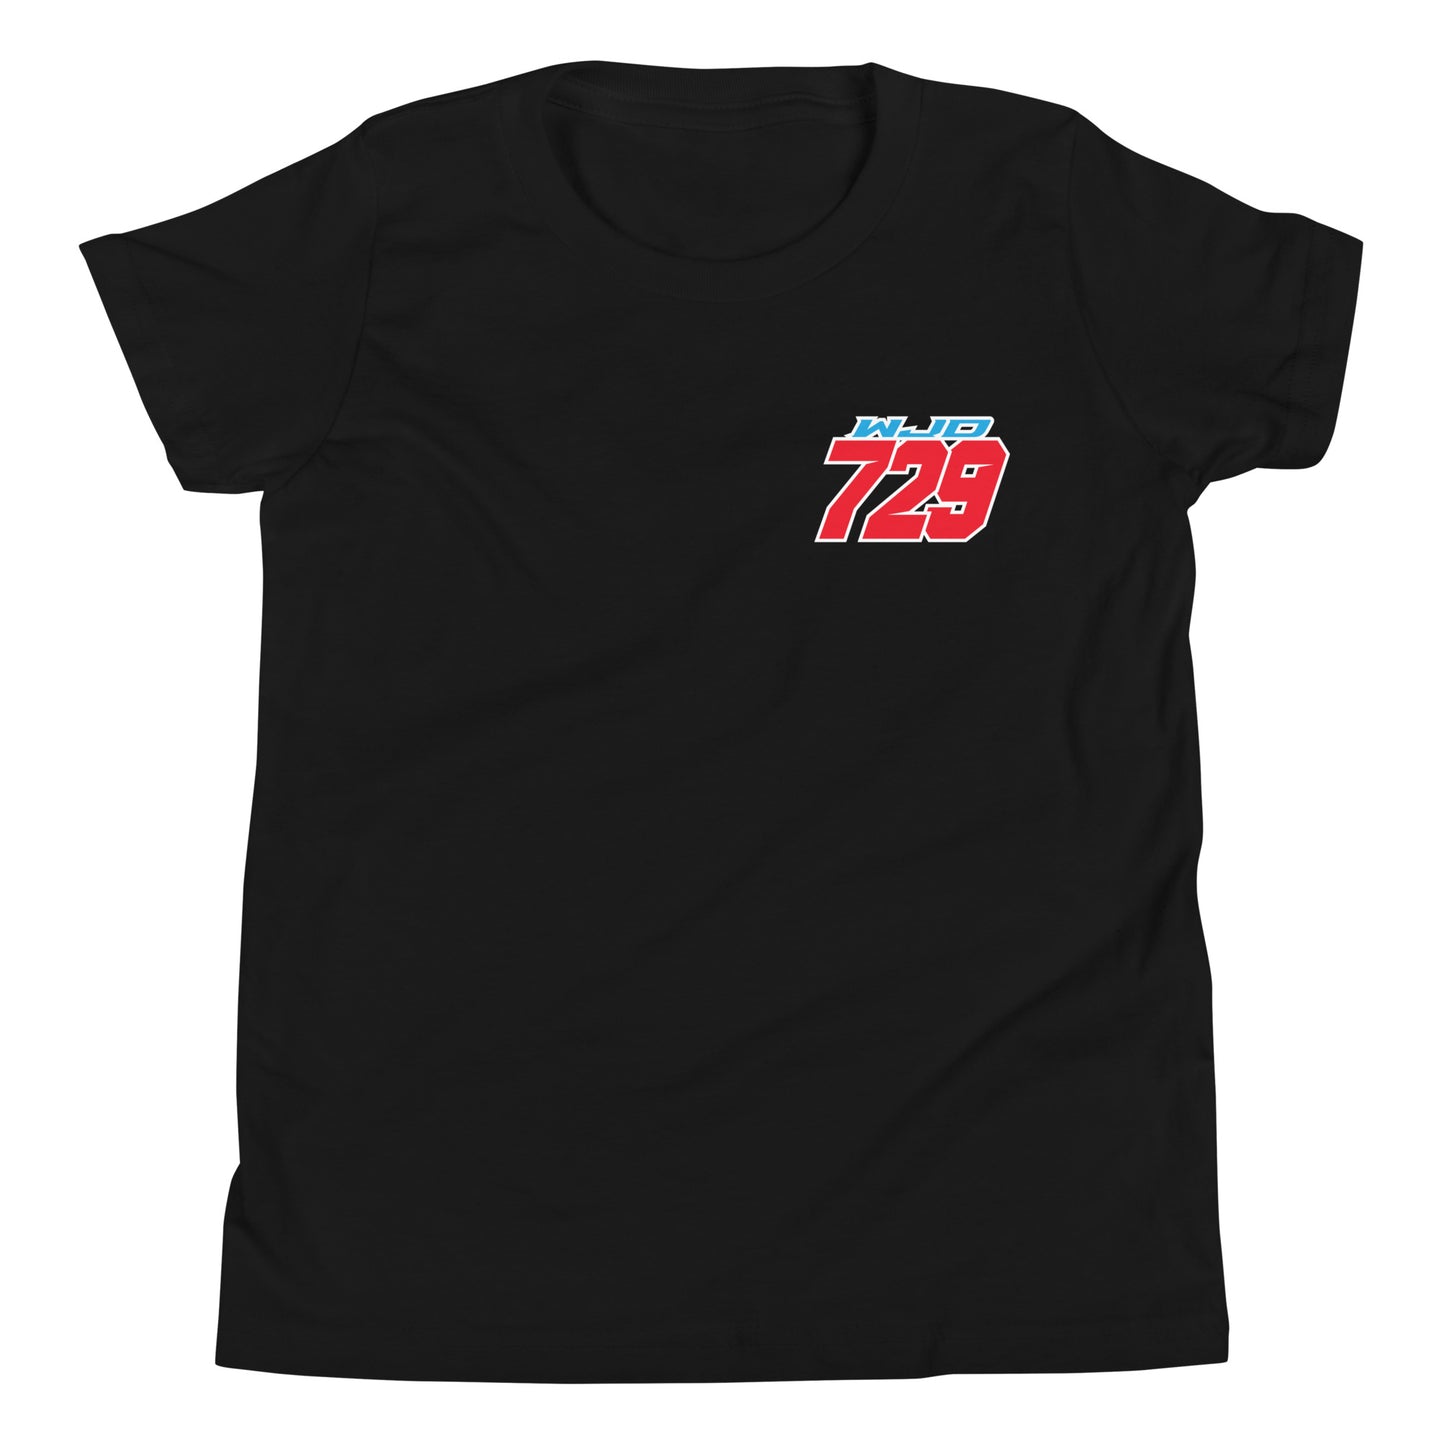 WJD 729 YOUTH T-Shirt